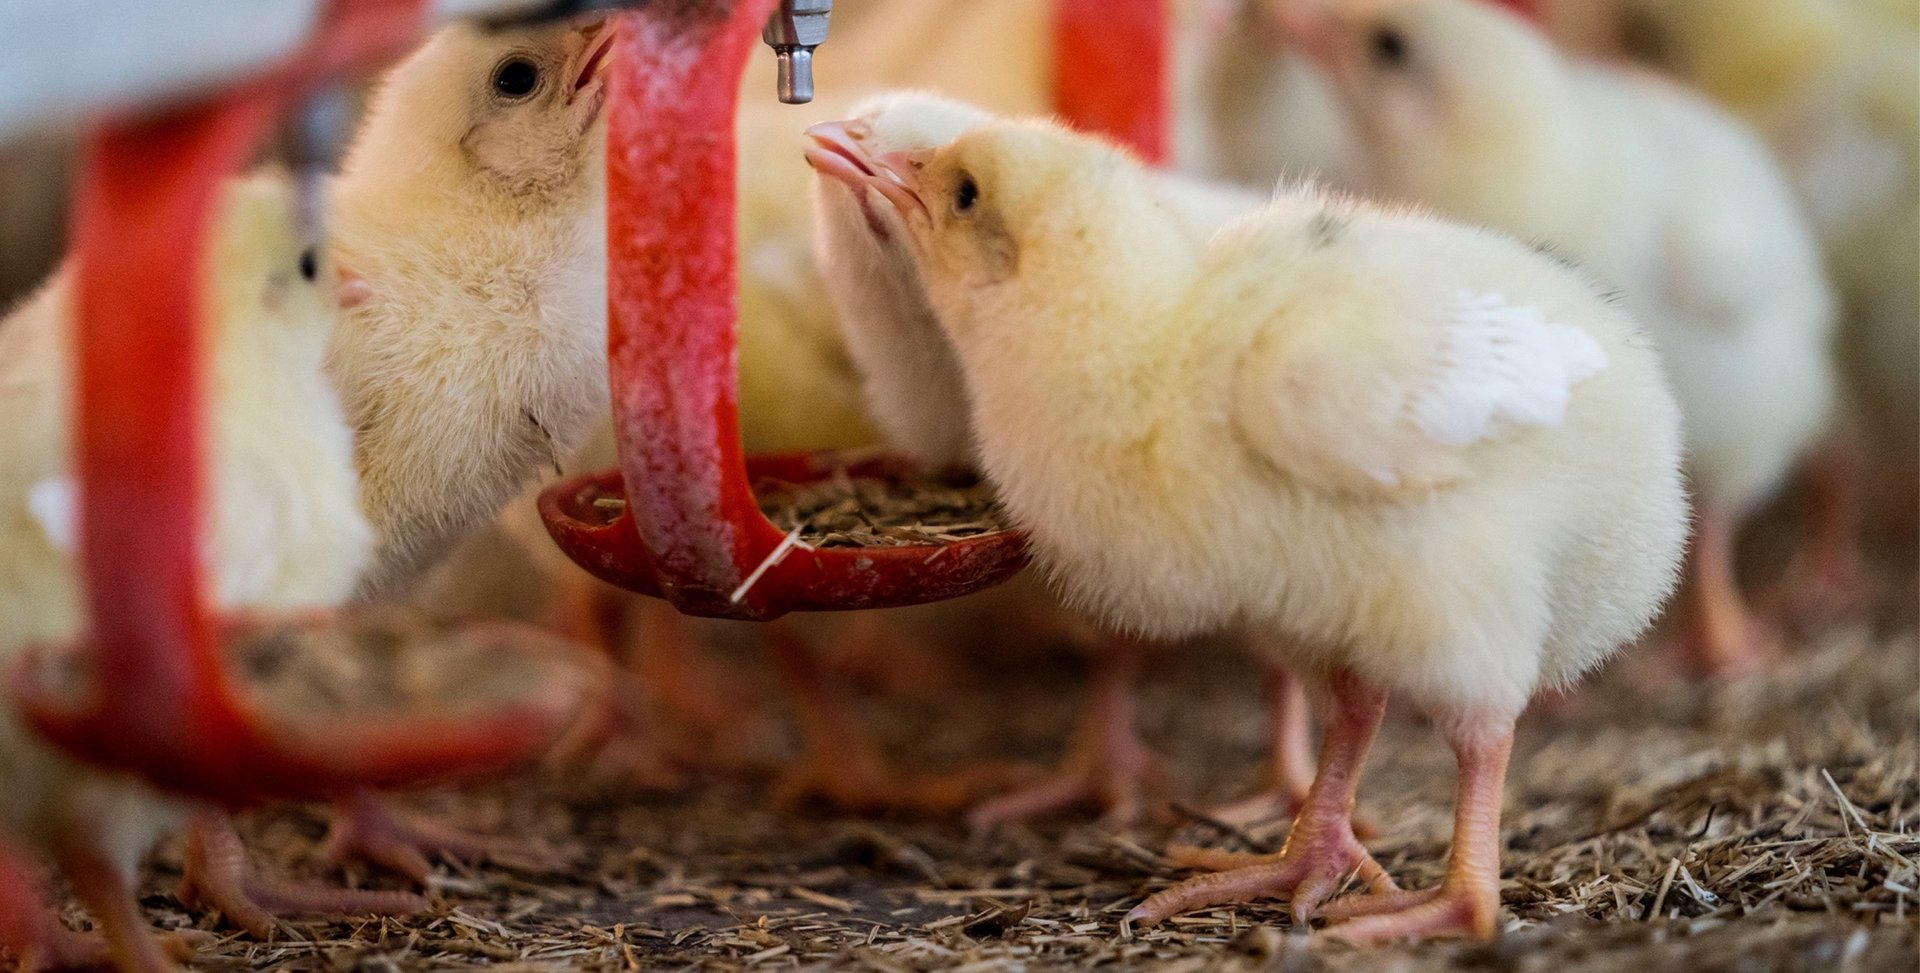 High welfare chicken farm. Credit: Valerie Kuypers